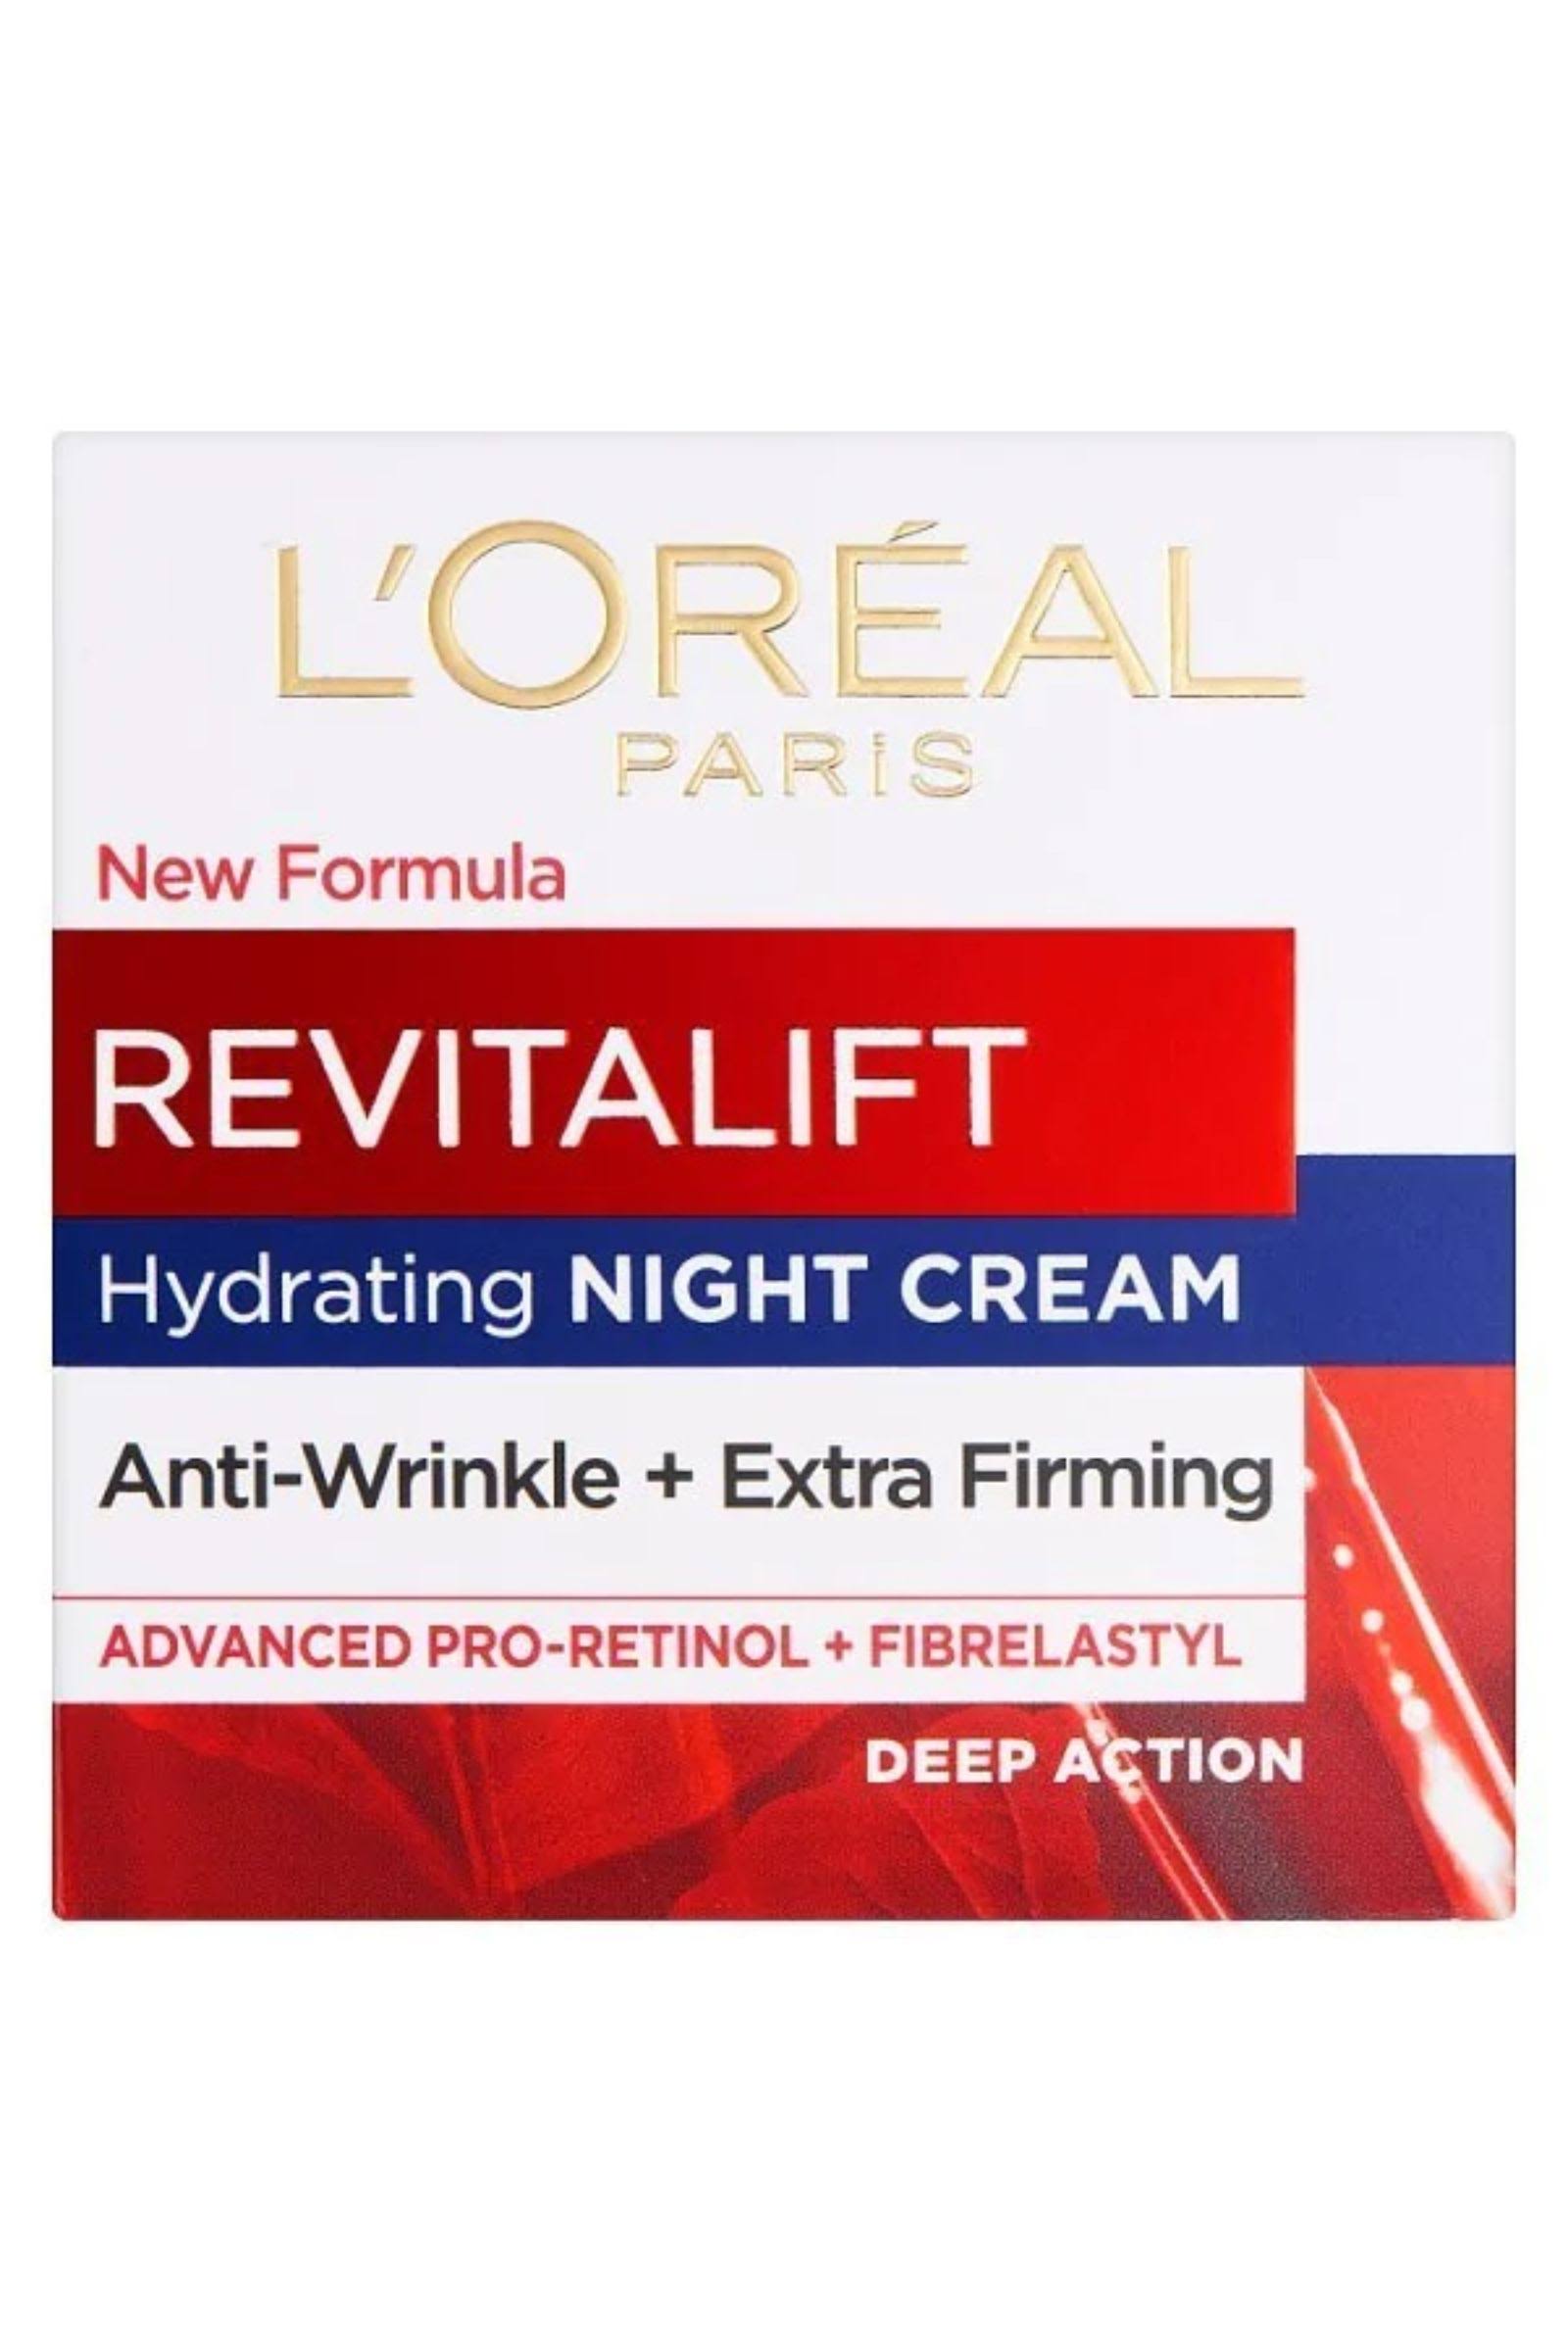 L'Oreal Paris Revitalift Anti Wrinkle Night Cream - 50ml